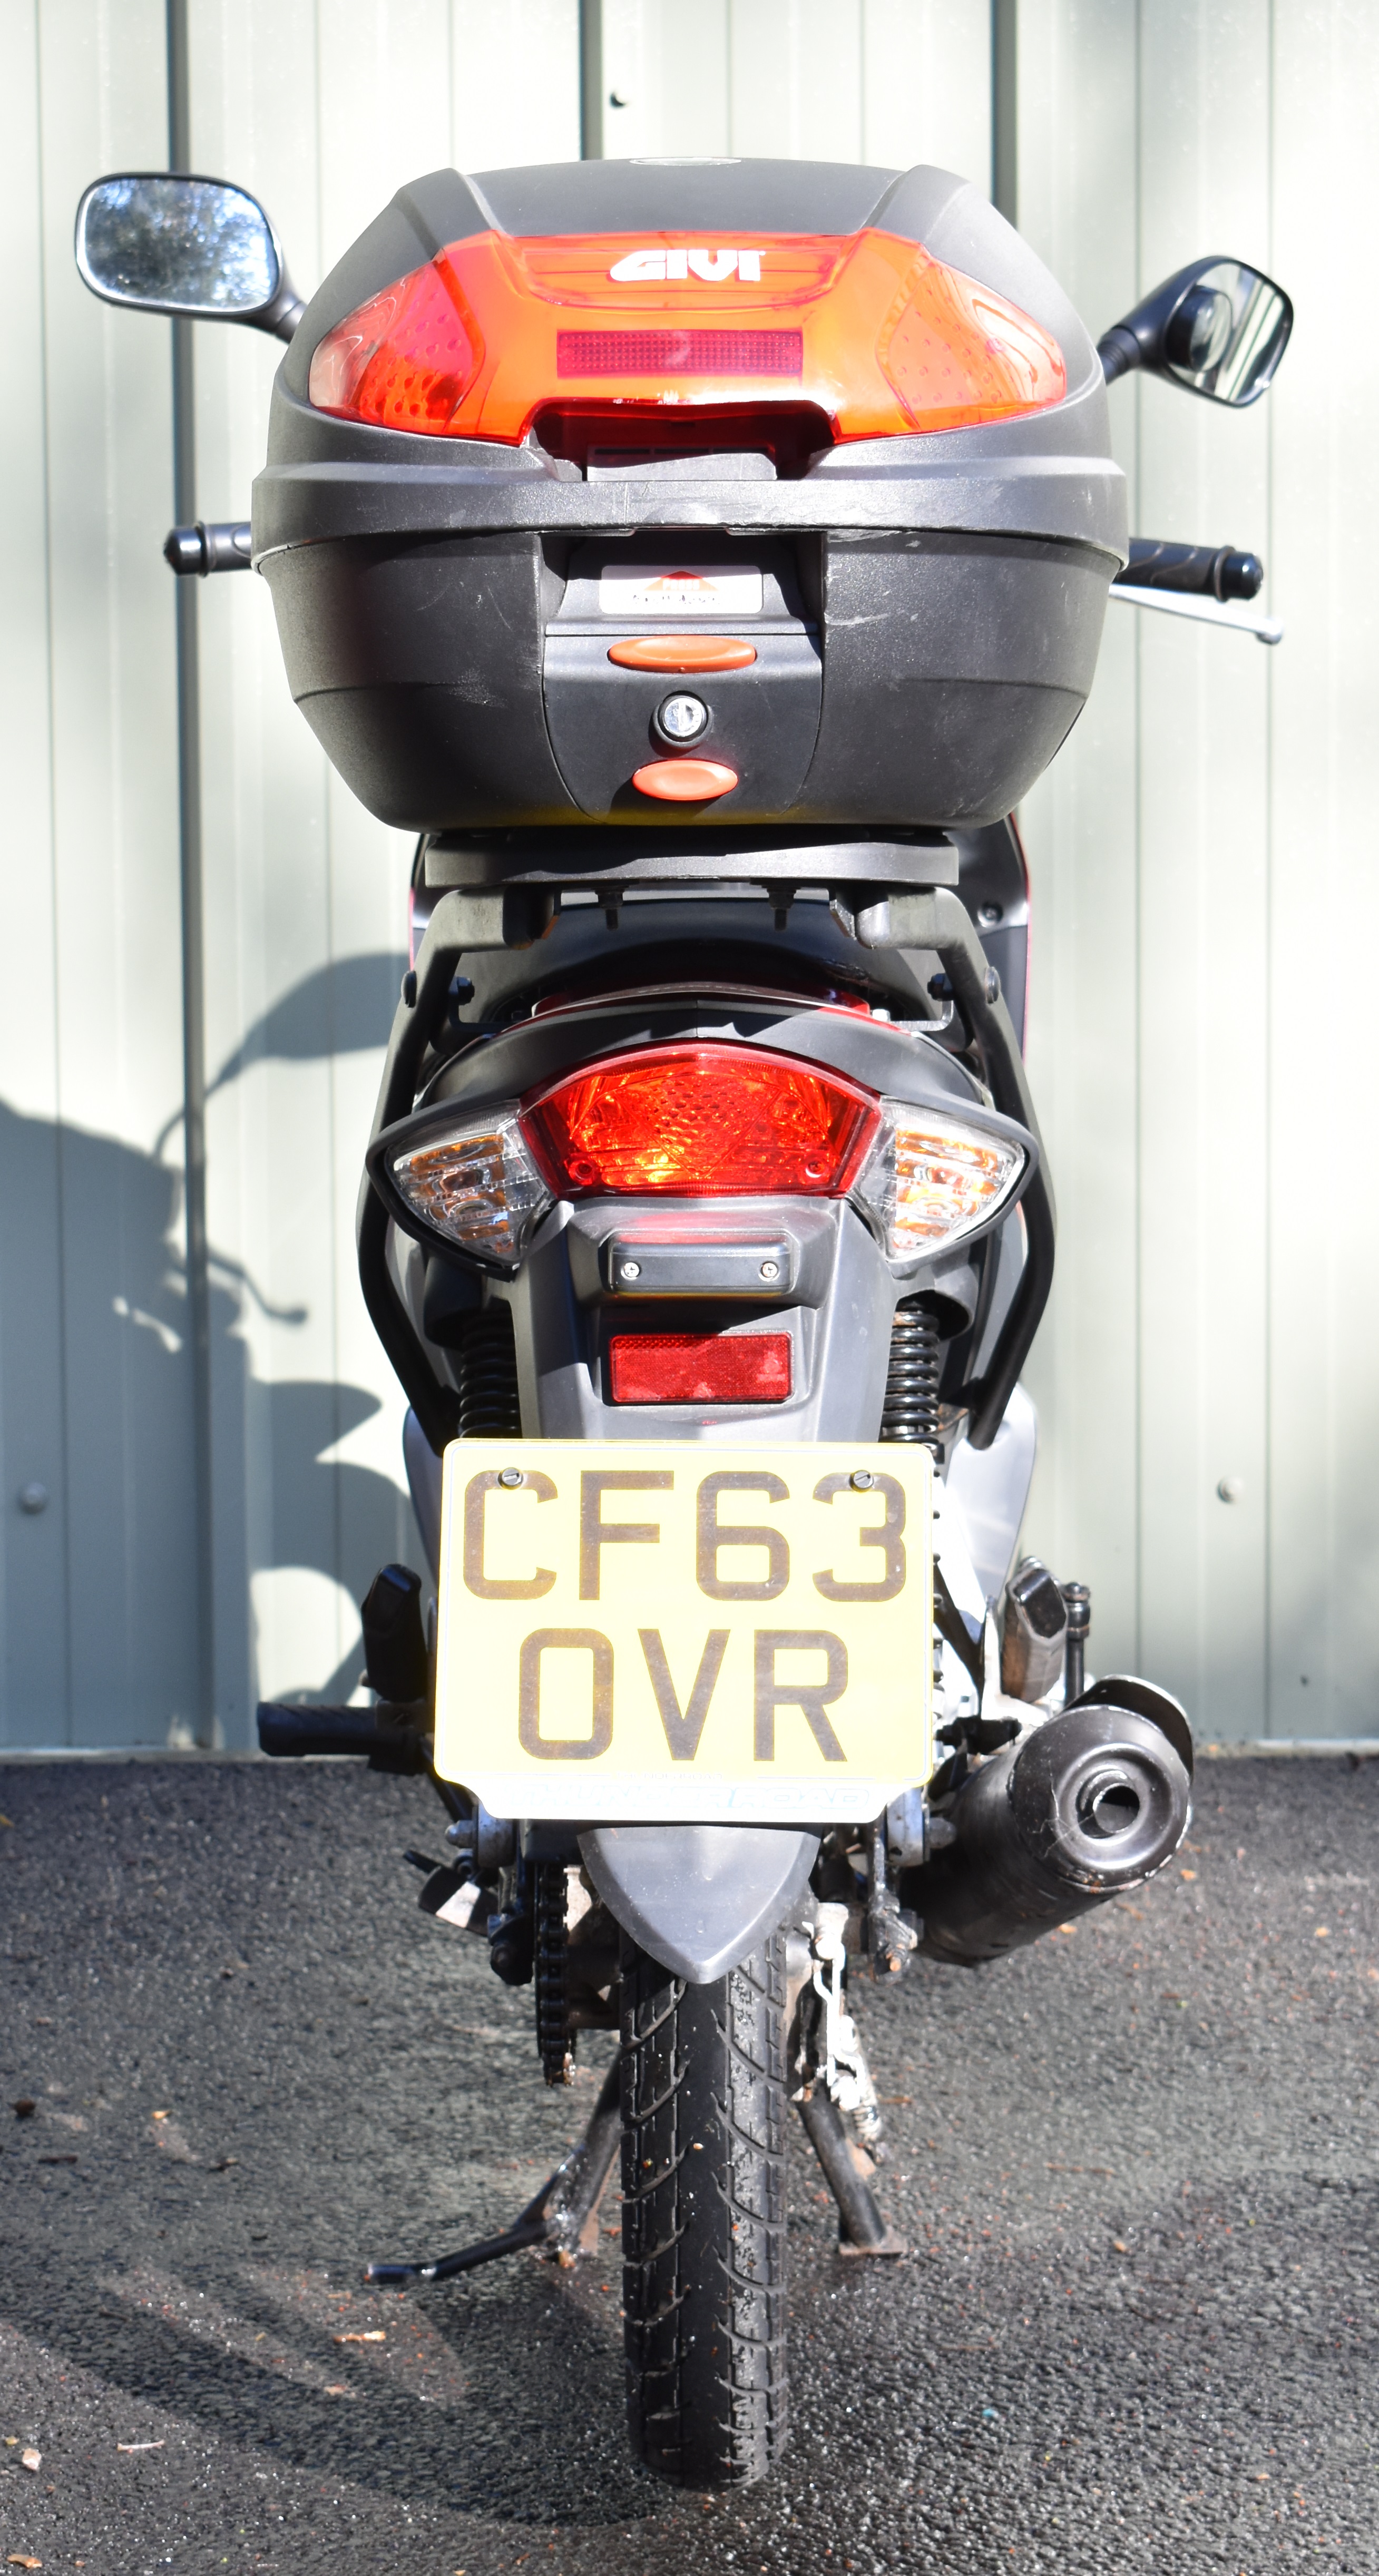 2014 Honda Wave four stroke 109cc motorcycle or scooter model AFS 110 2SHC, registration number CF63 - Image 15 of 17